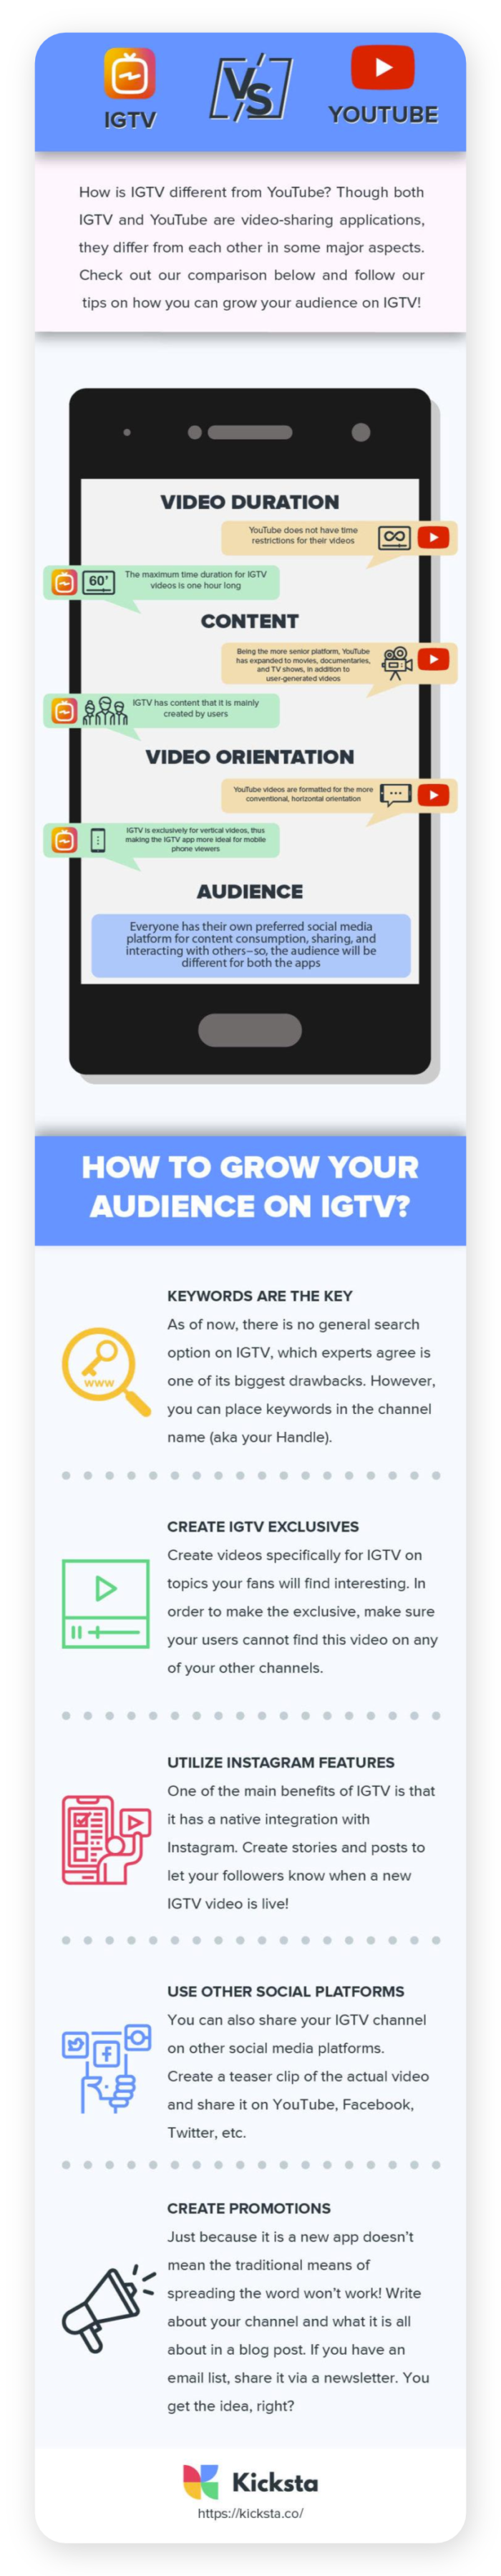 IGTV vs YouTube Infographic